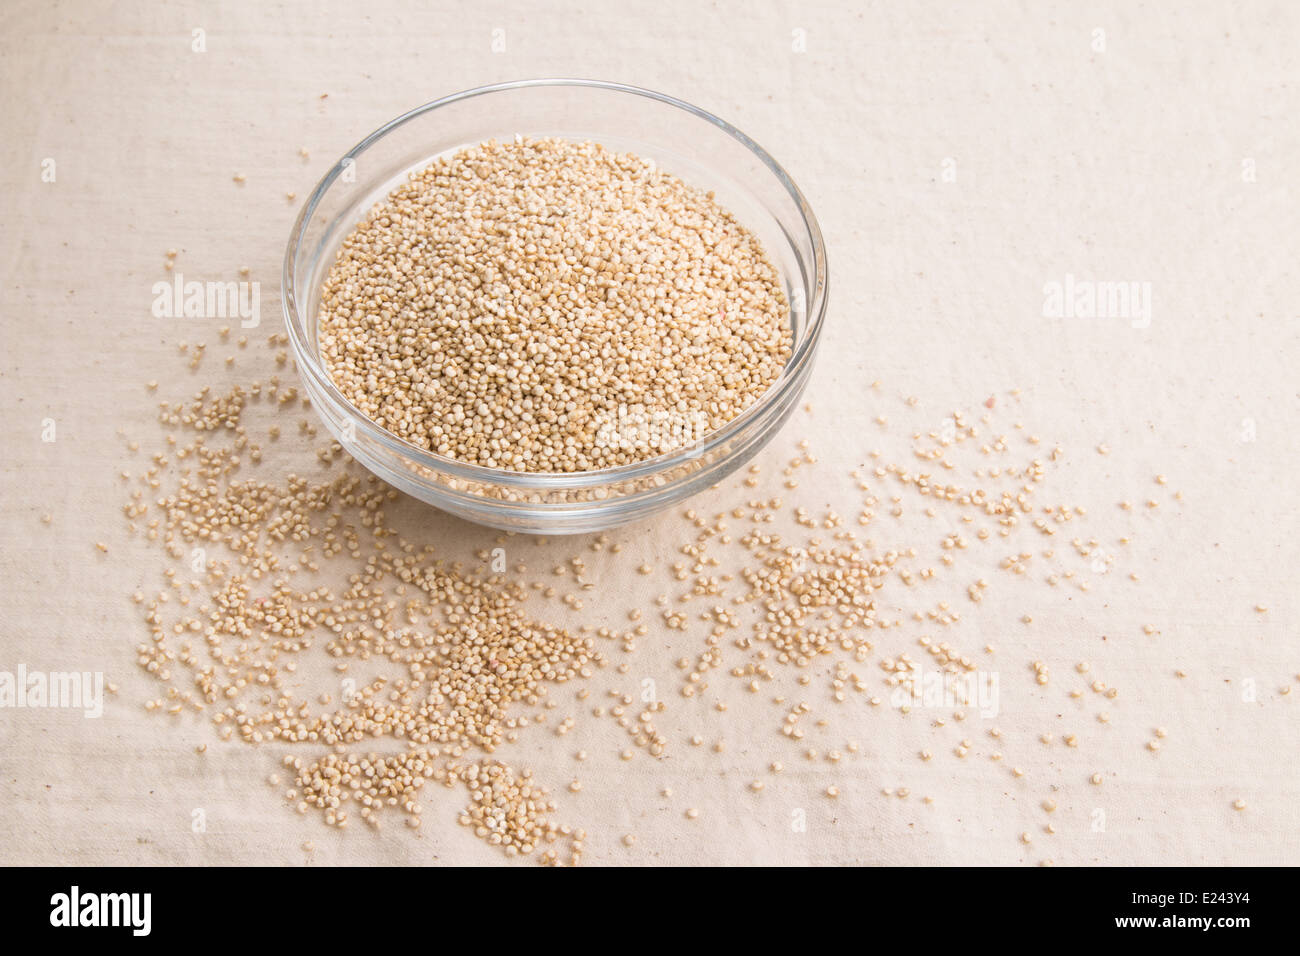 Les graines de quinoa dans un bol en verre sur un fond clair (3 de 24 ) Banque D'Images